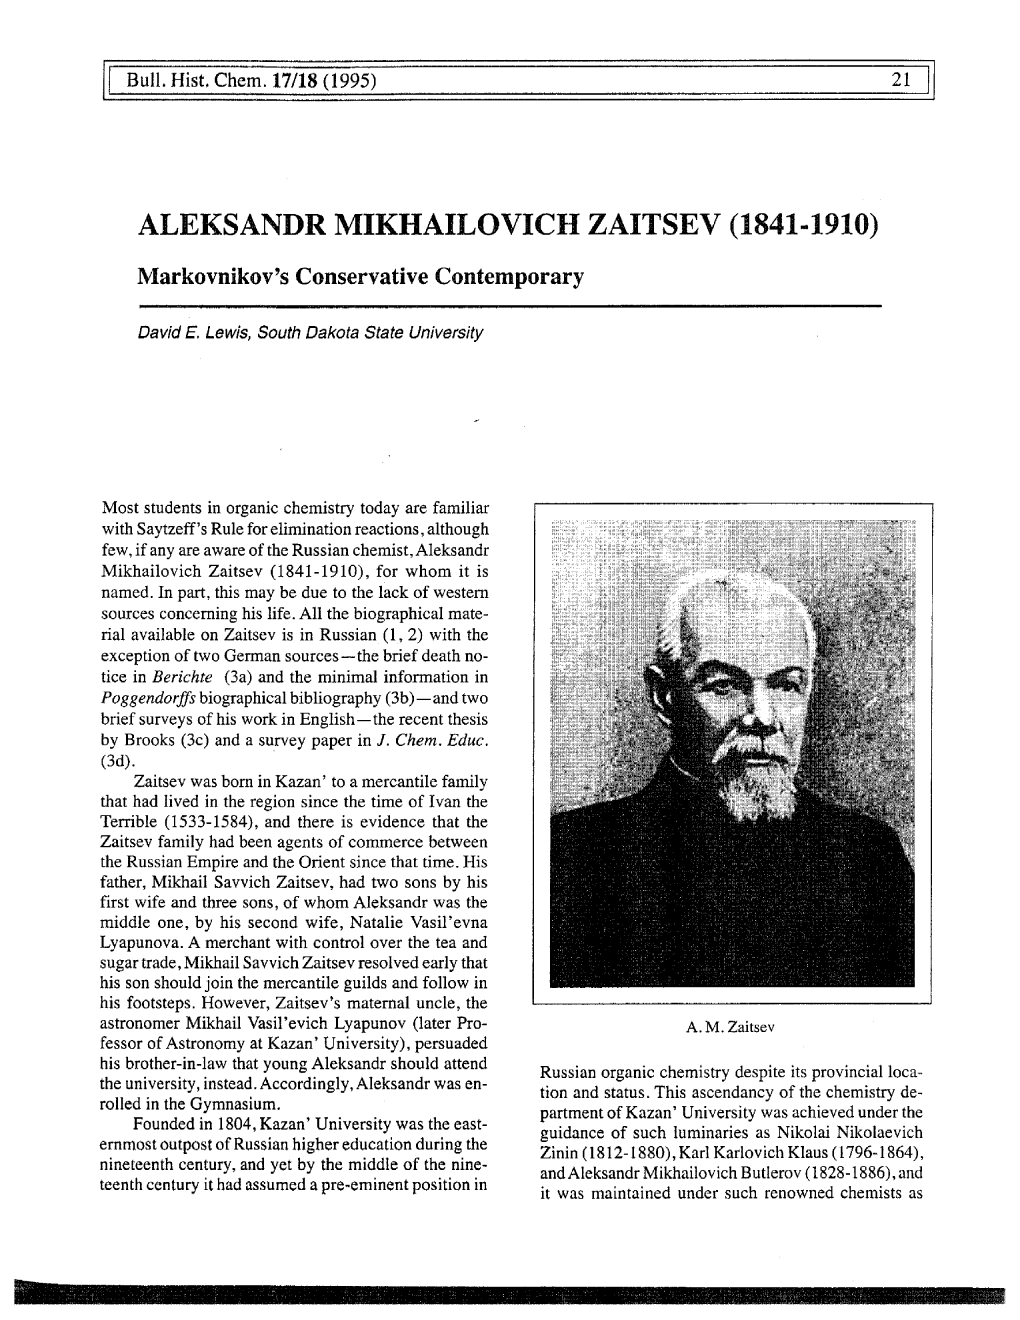 ALEKSANDR MIKHAILOVICH ZAITSEV (1841-1910) Markovnikov's Conservative Contemporary